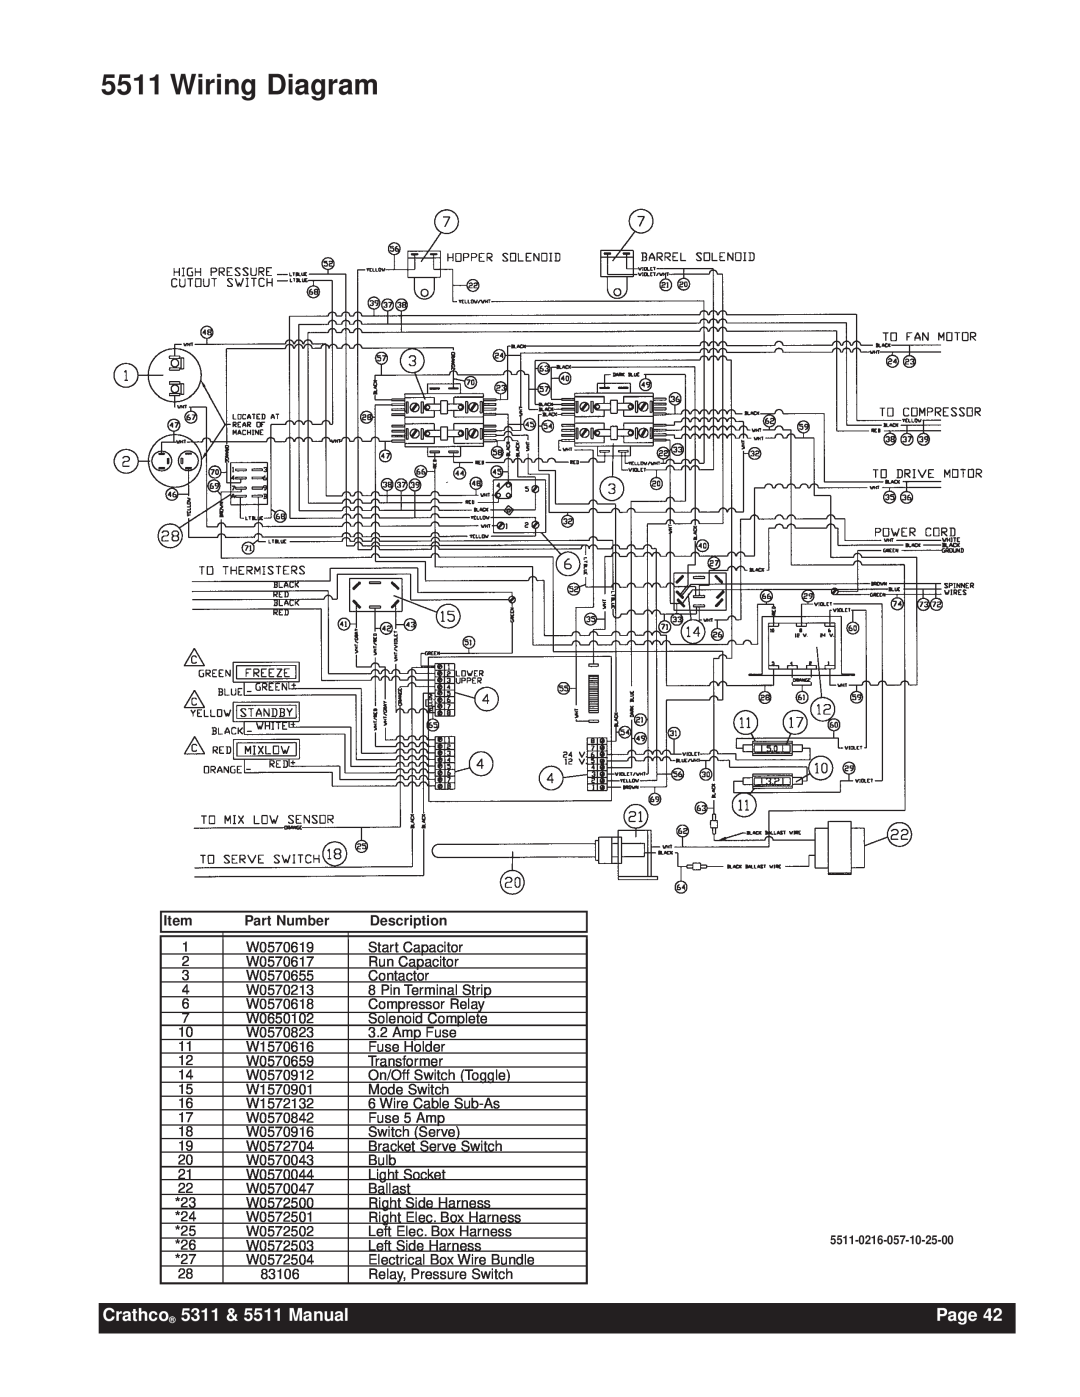 Grindmaster instruction manual Wiring Diagram, Crathco 5311 & 5511 Manual, Page, Item, Part Number, Description 